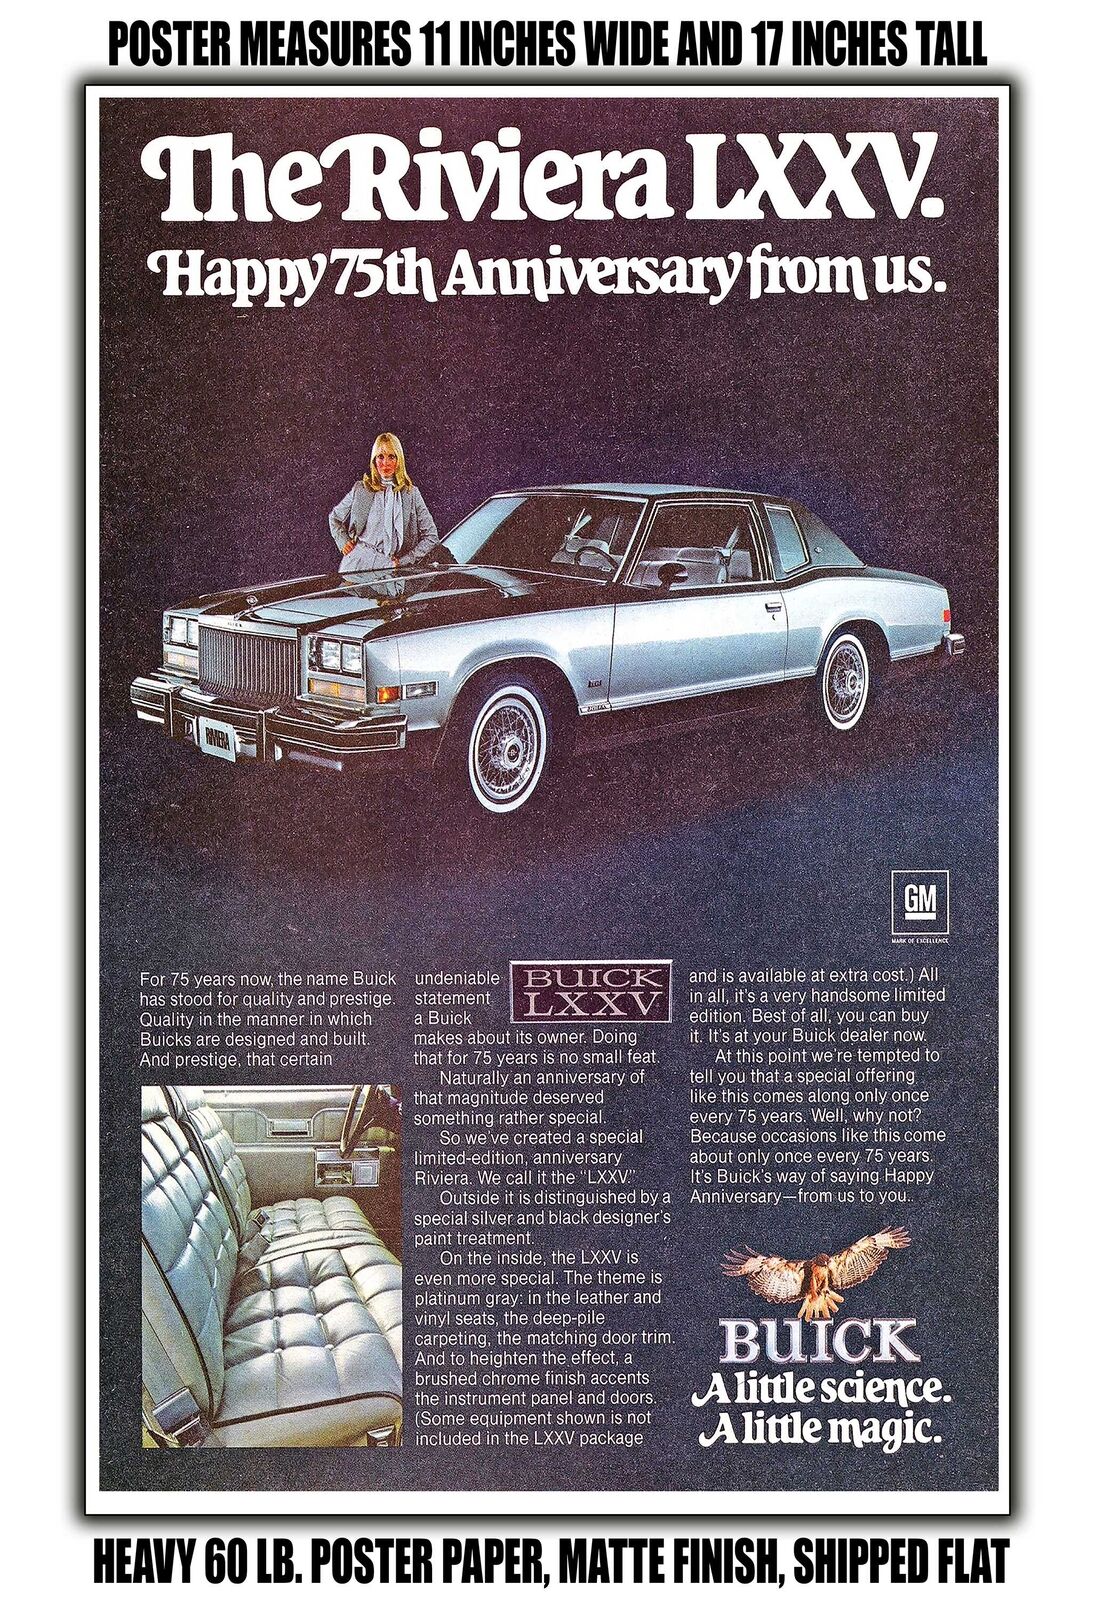 11x17 POSTER - 1978 Buick Riviera LXXV